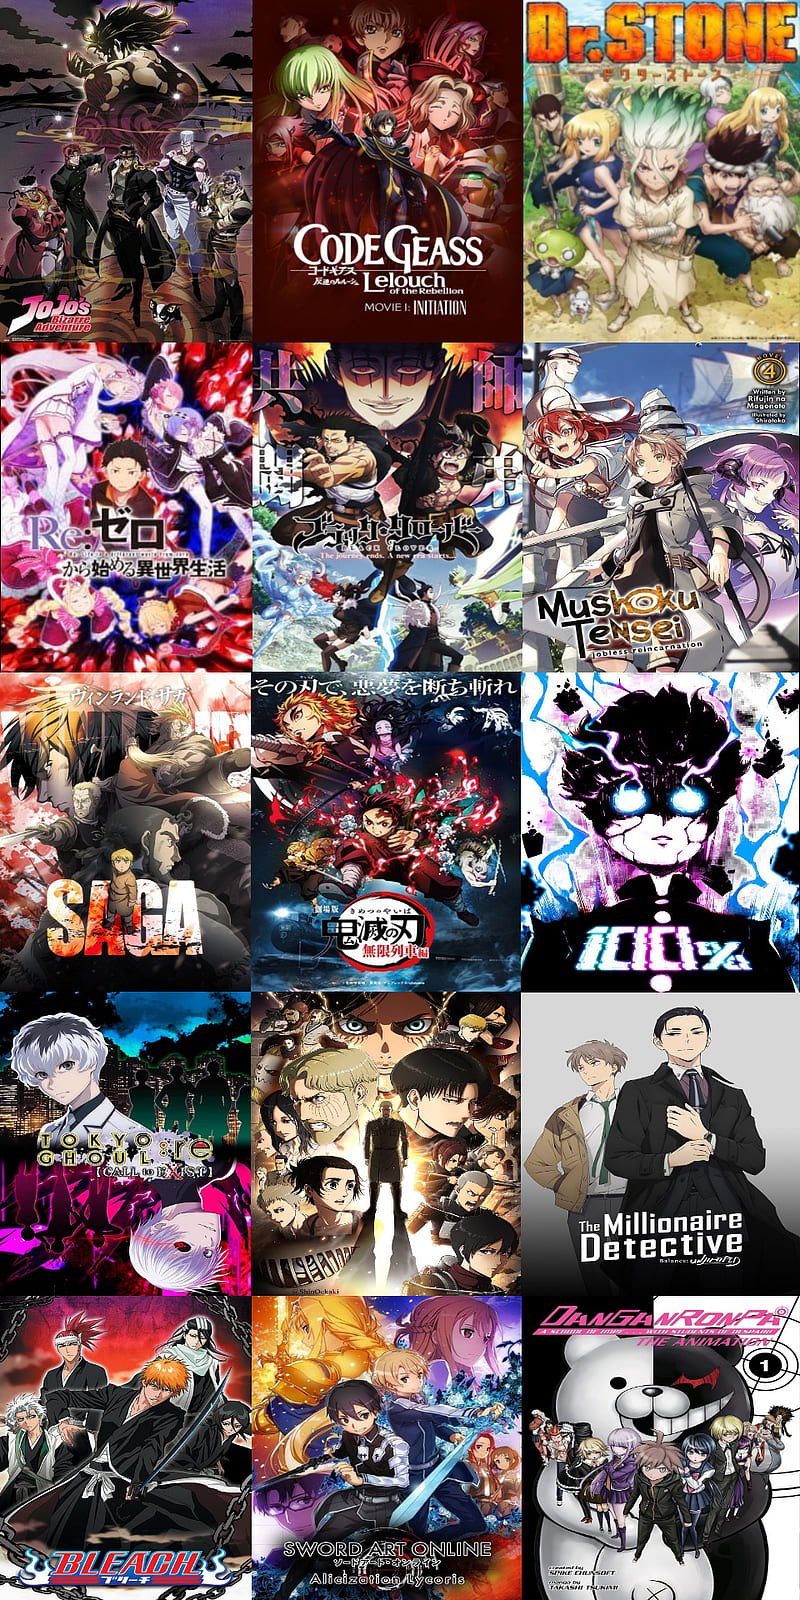 Anime Mix, animes, attack on titan, bleach, code geass, jojo